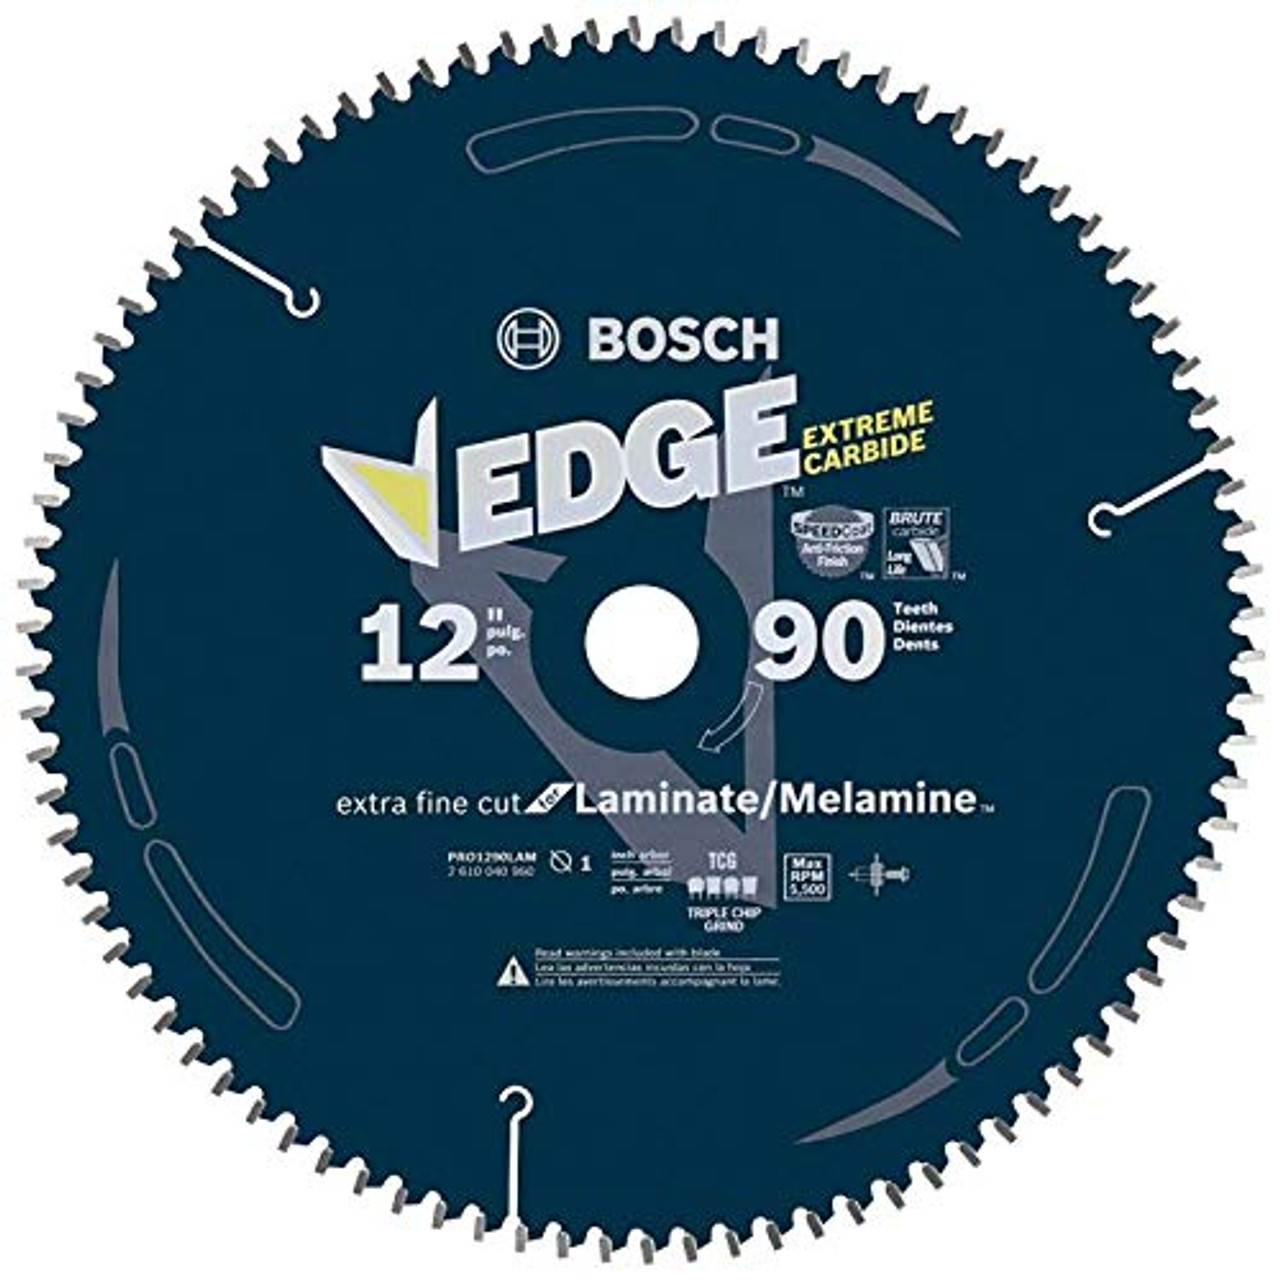 Bosch PRO1290LAM 12 In. 90 Tooth Laminate Cutting Circular Saw Blade